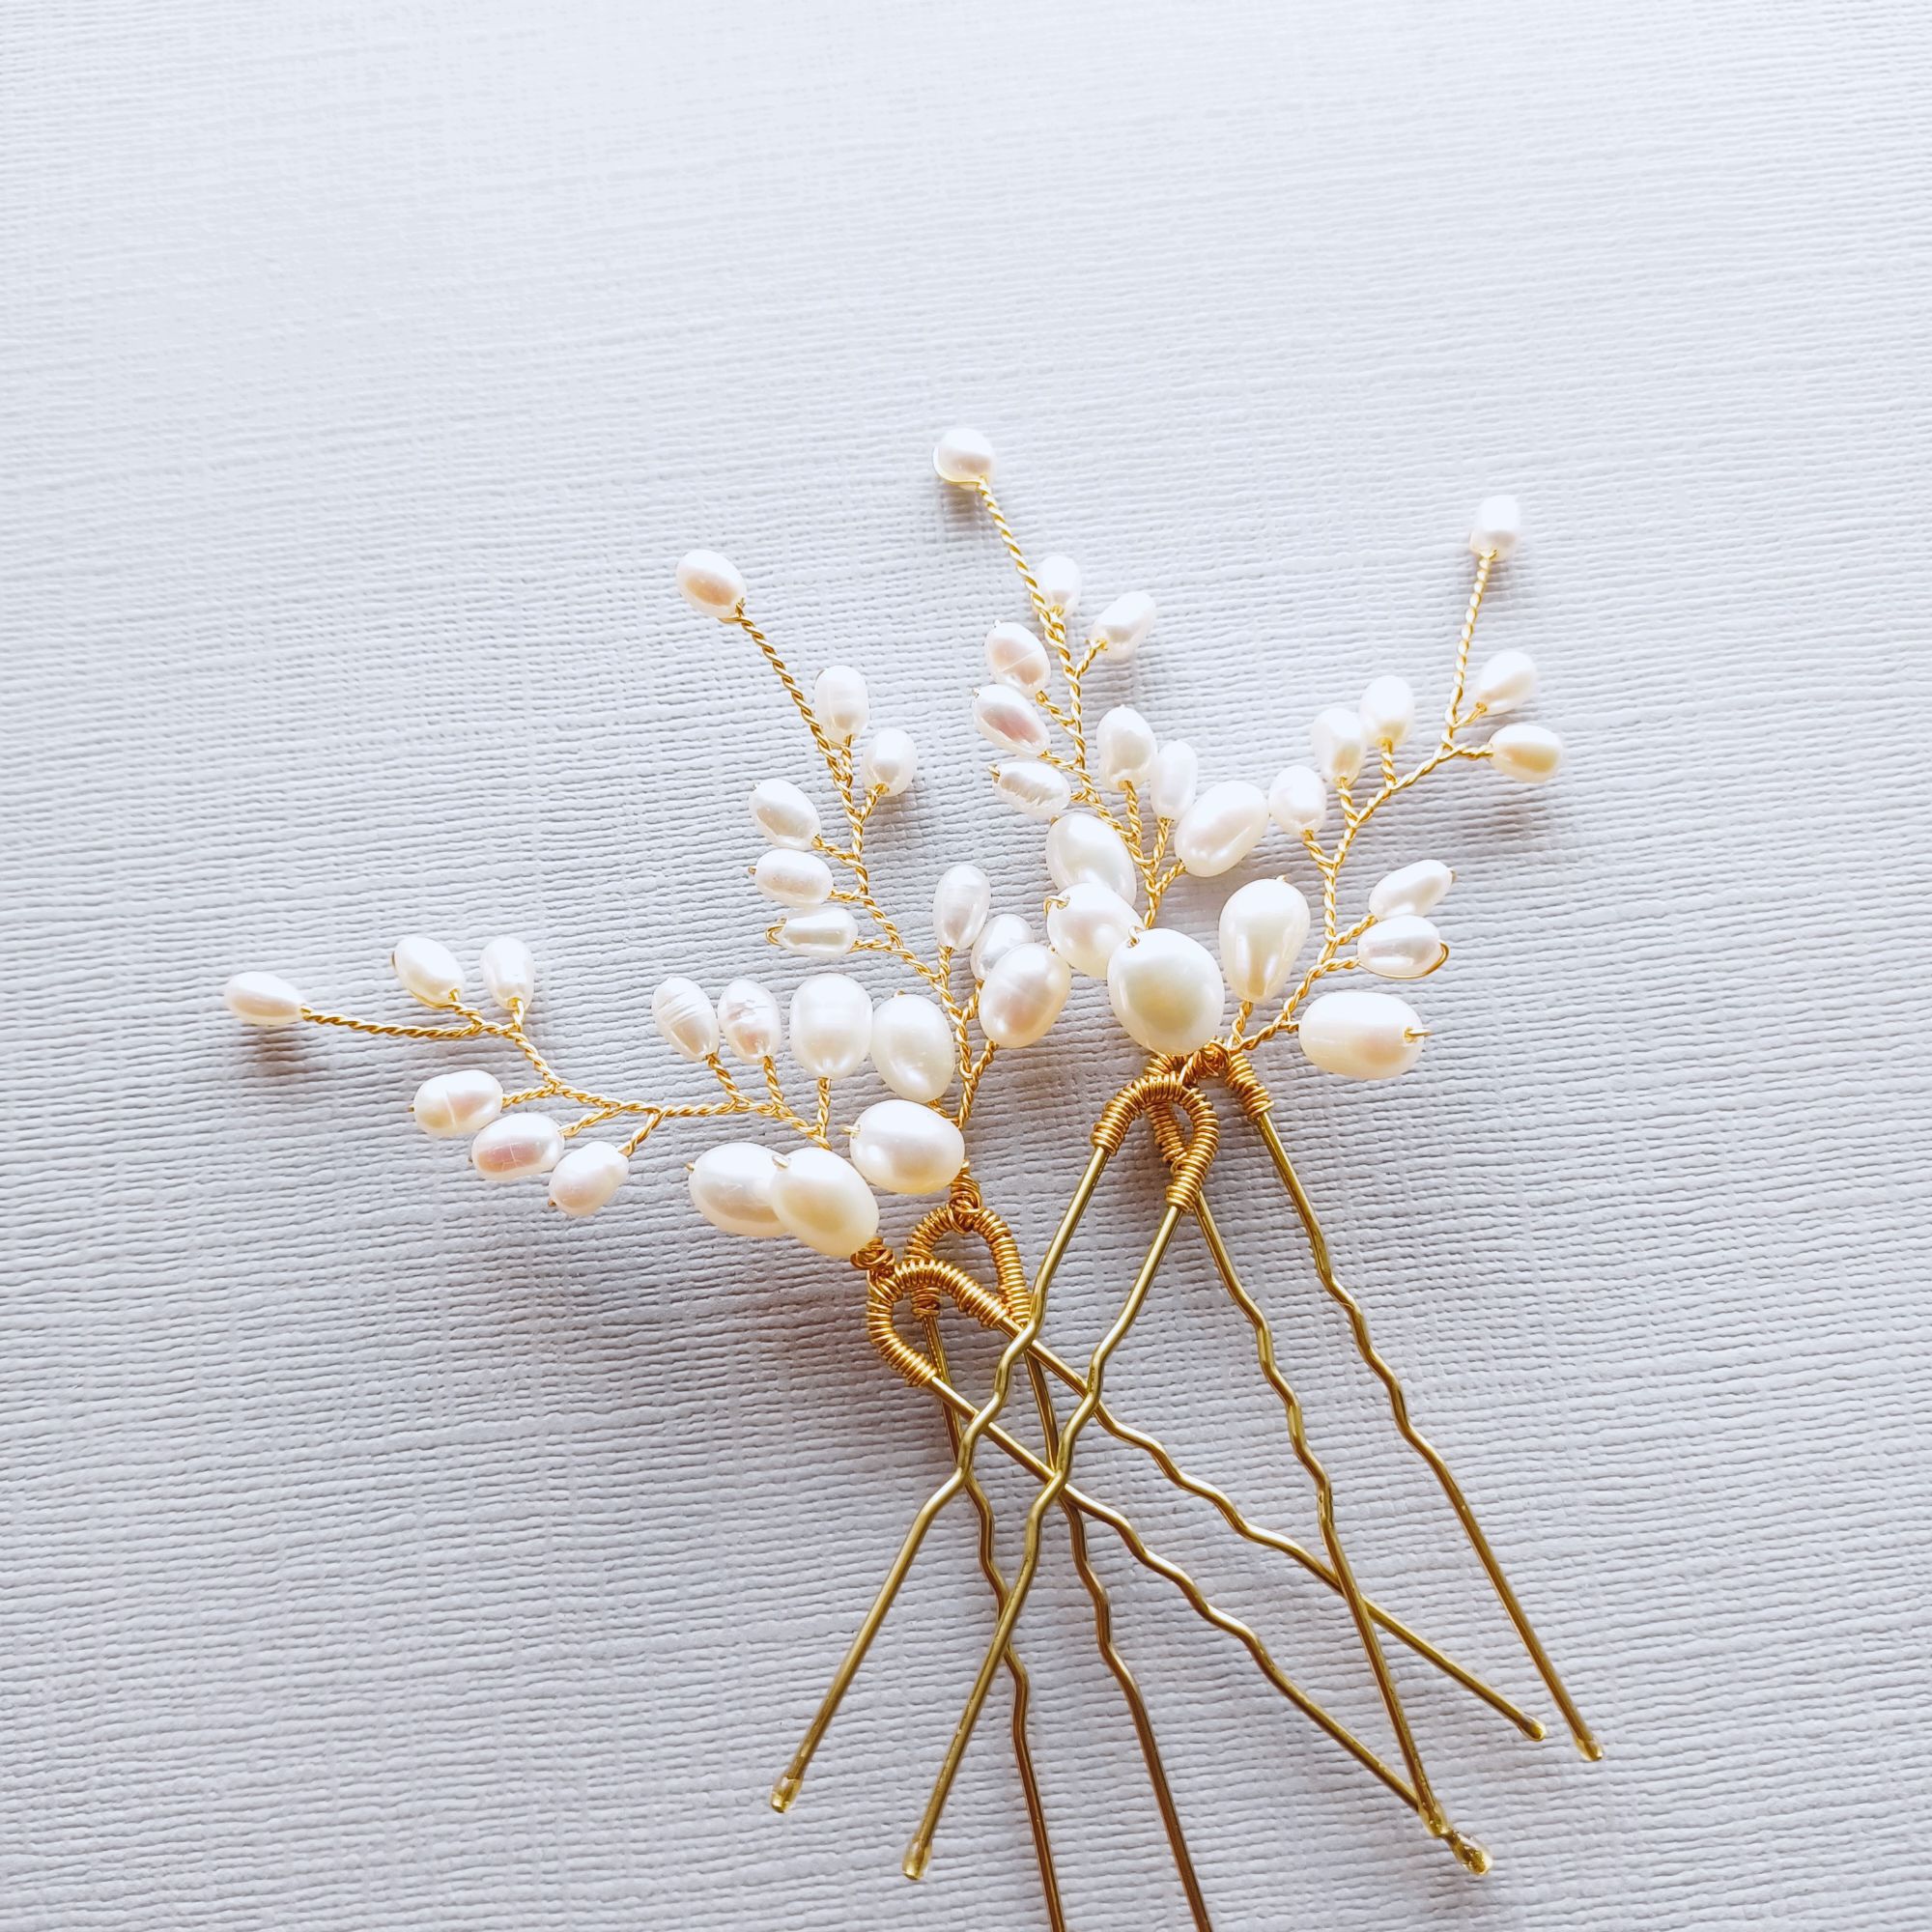 White bridal hairpins custom made by Beady Bride UK